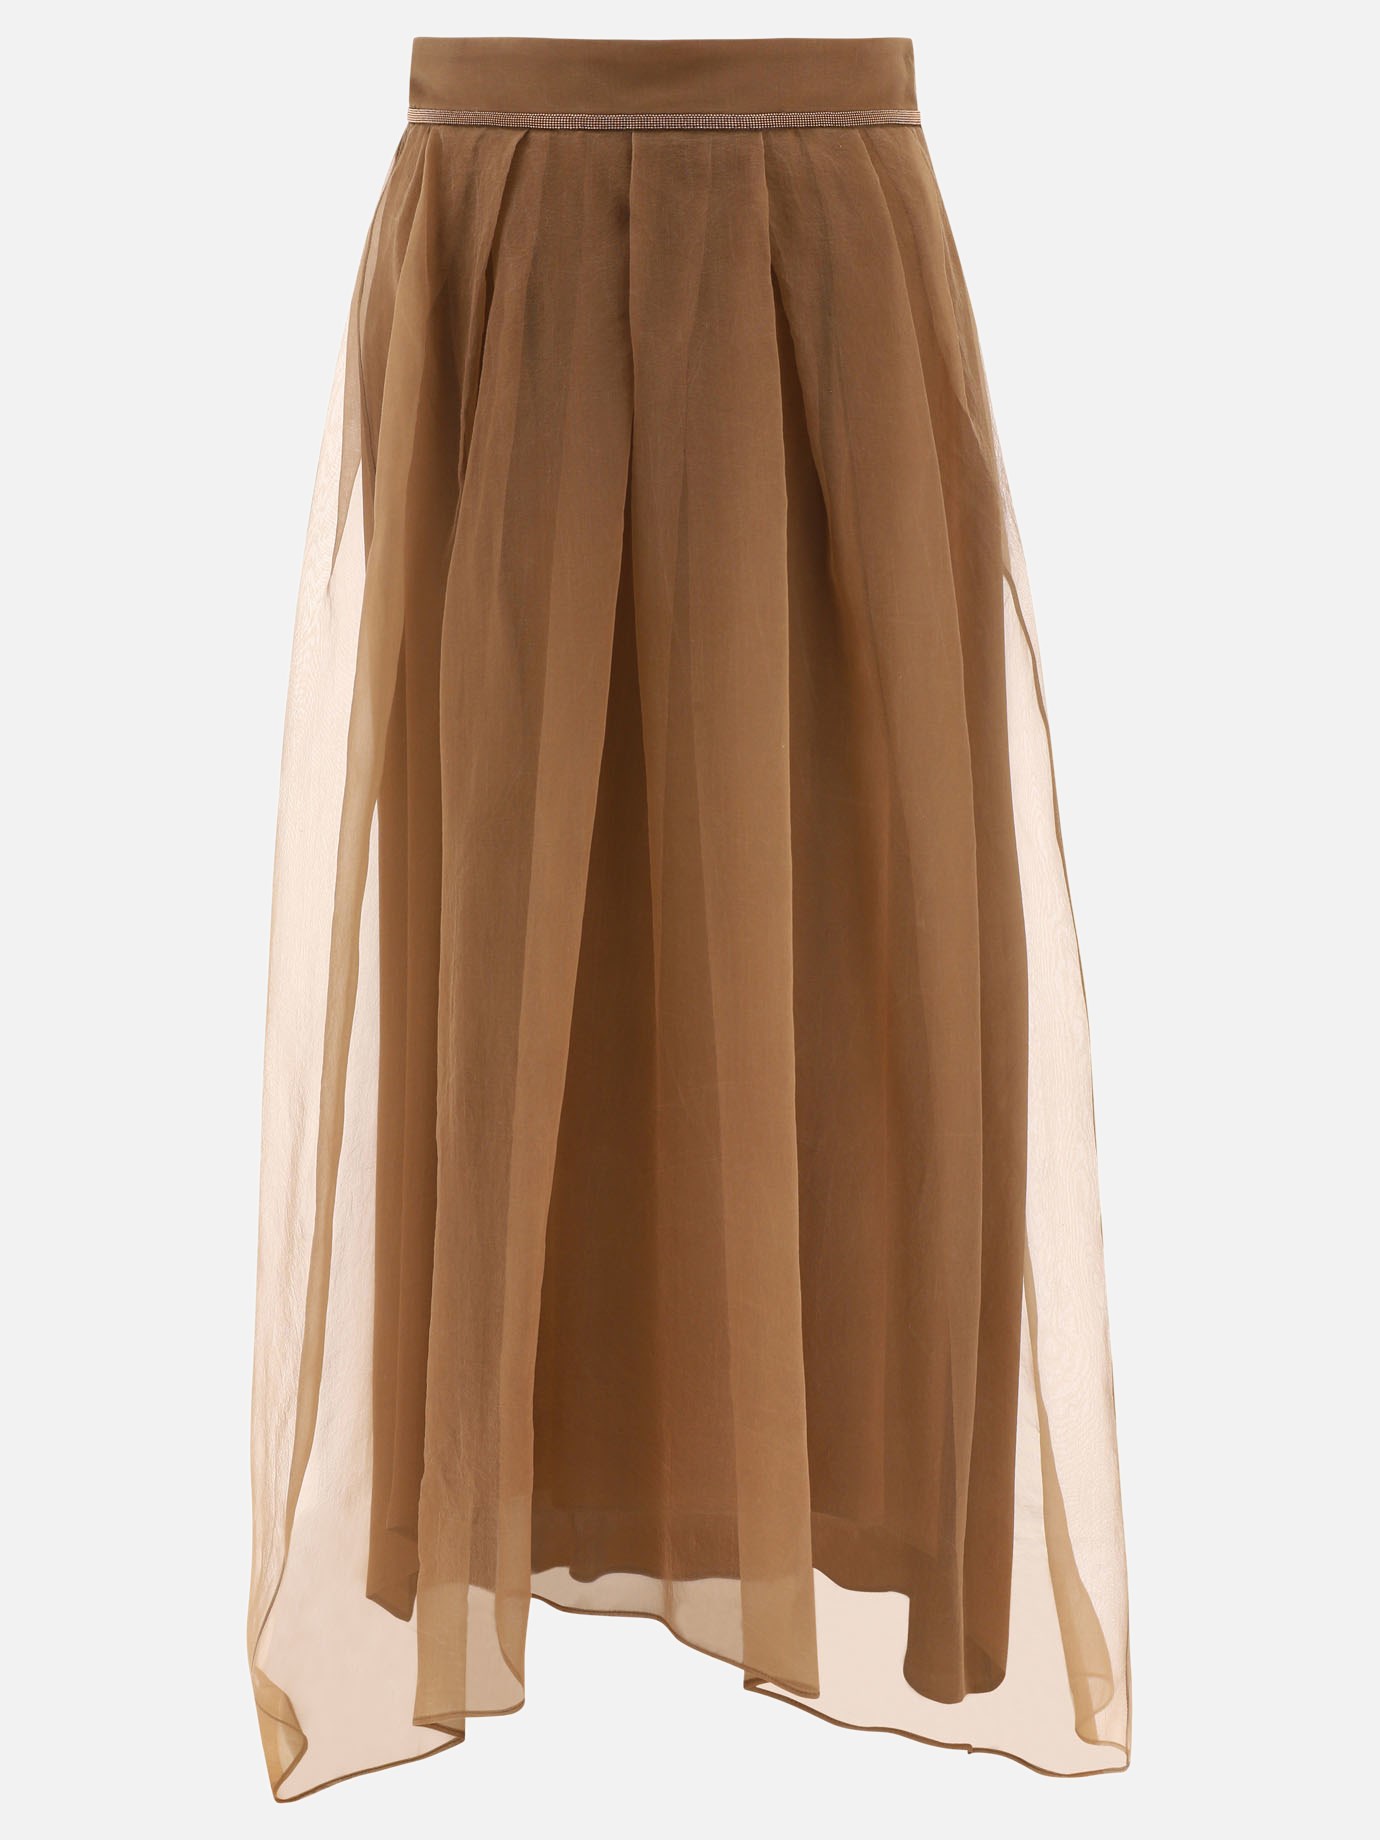 Asymmetrical layered skirt